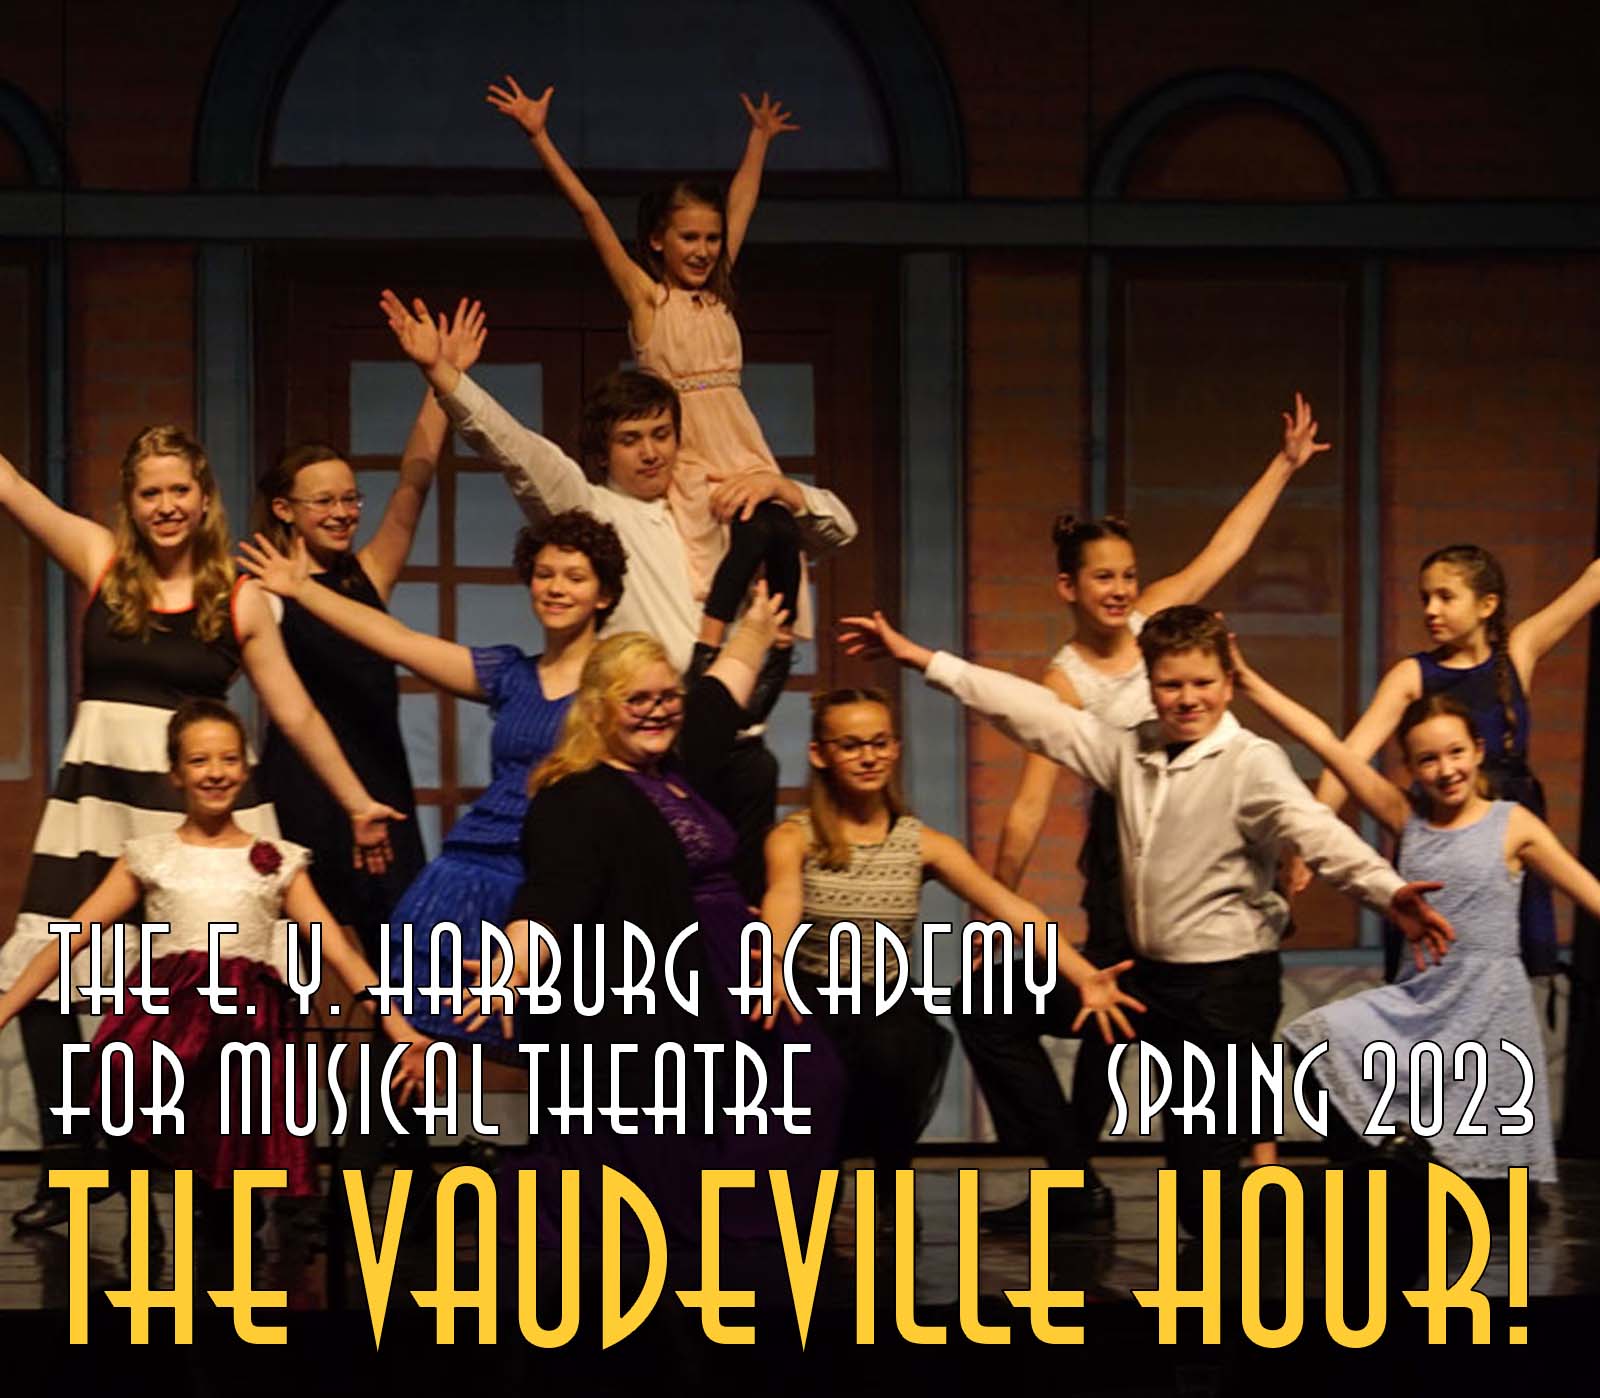 The Vaudeville Hour! Spring 2023 - 5